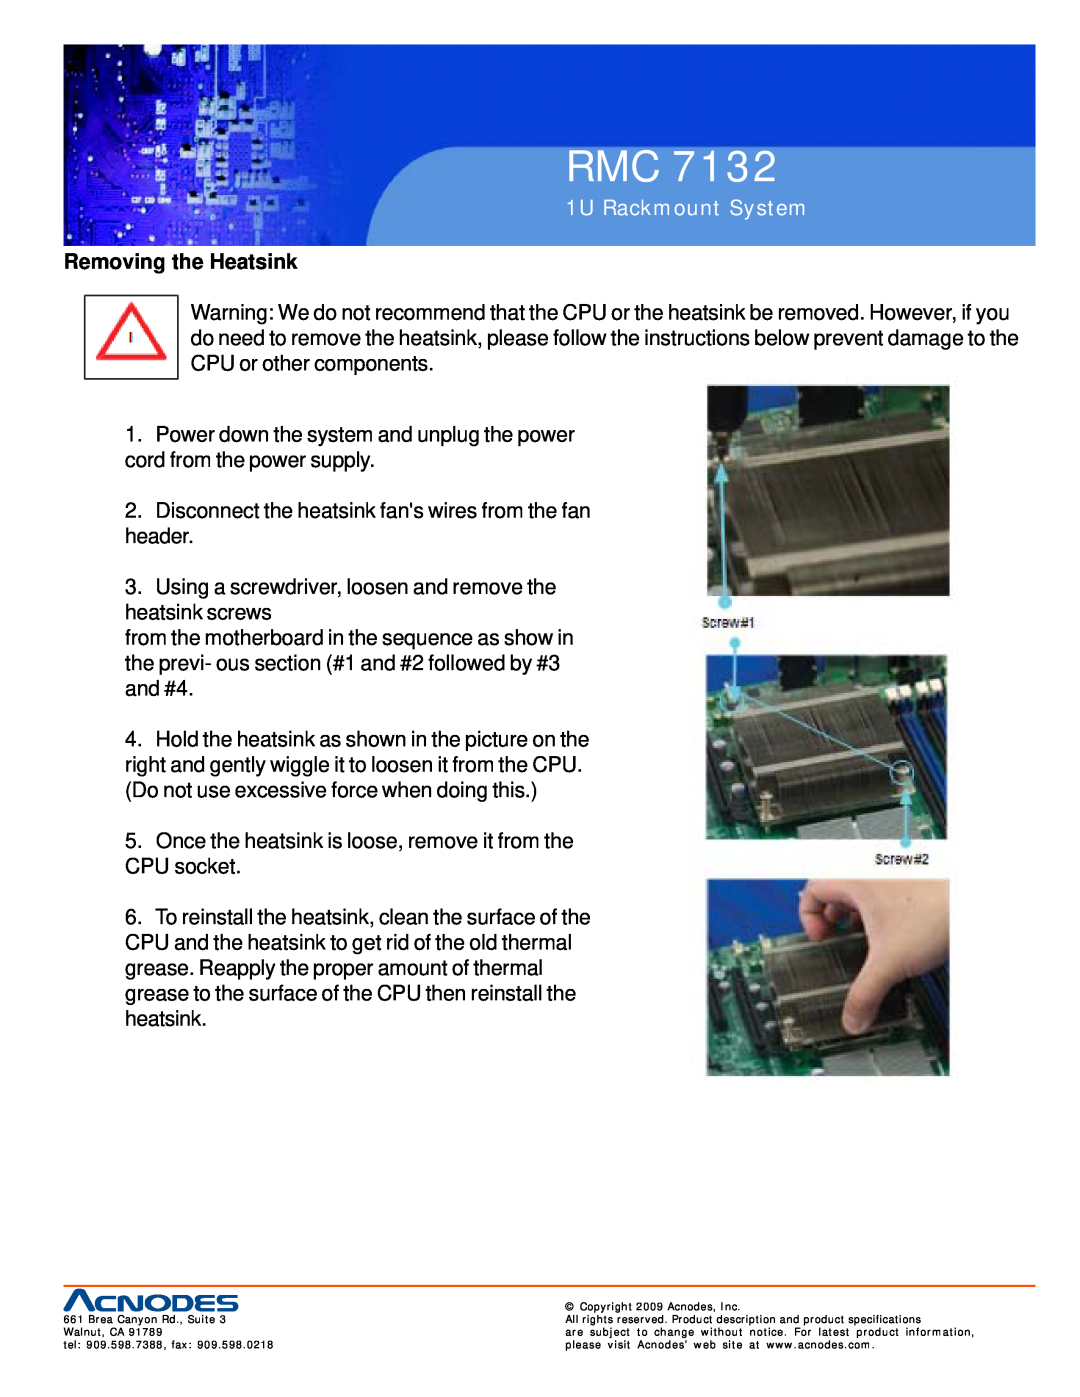 Acnodes RMC 7132 user manual Removing the Heatsink, 1U Rackmount System 